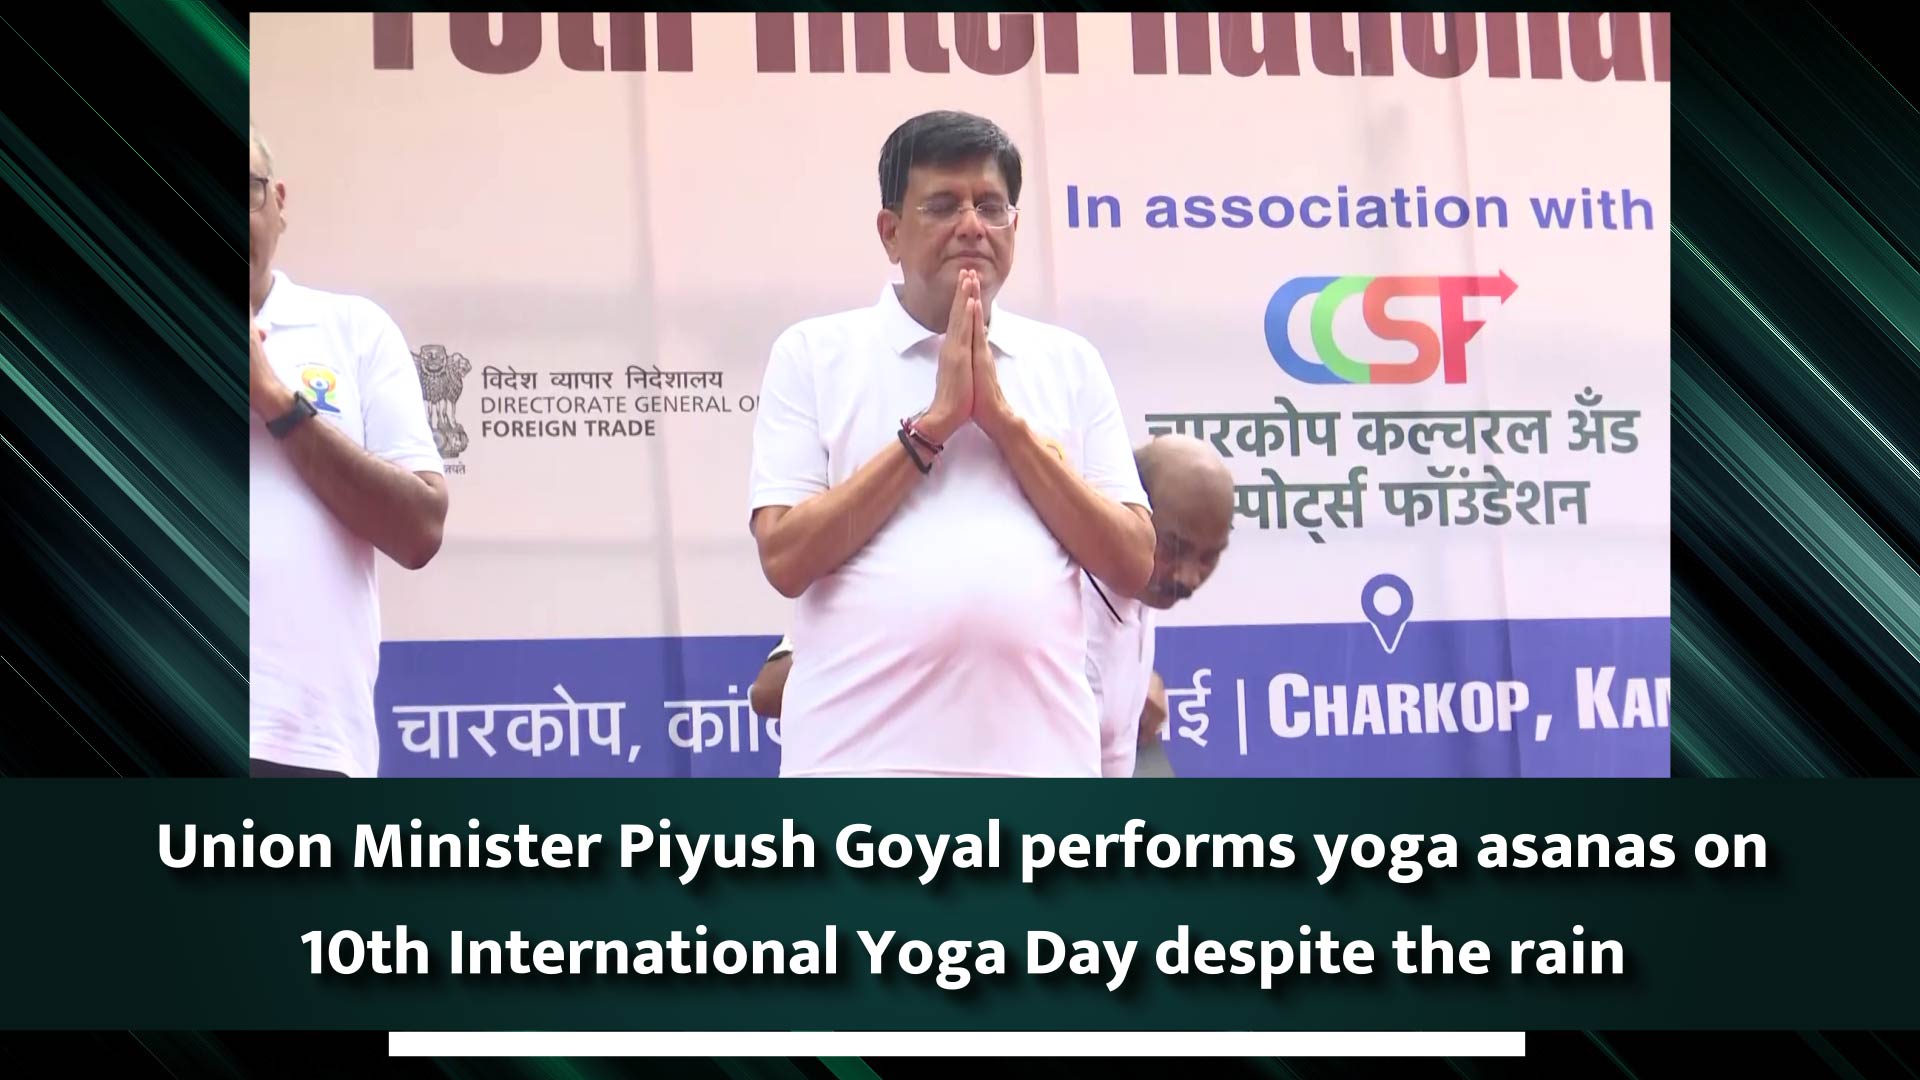 Union Minister Piyush Goyal performs yoga asanas on 10th International Yoga Day despite the rain